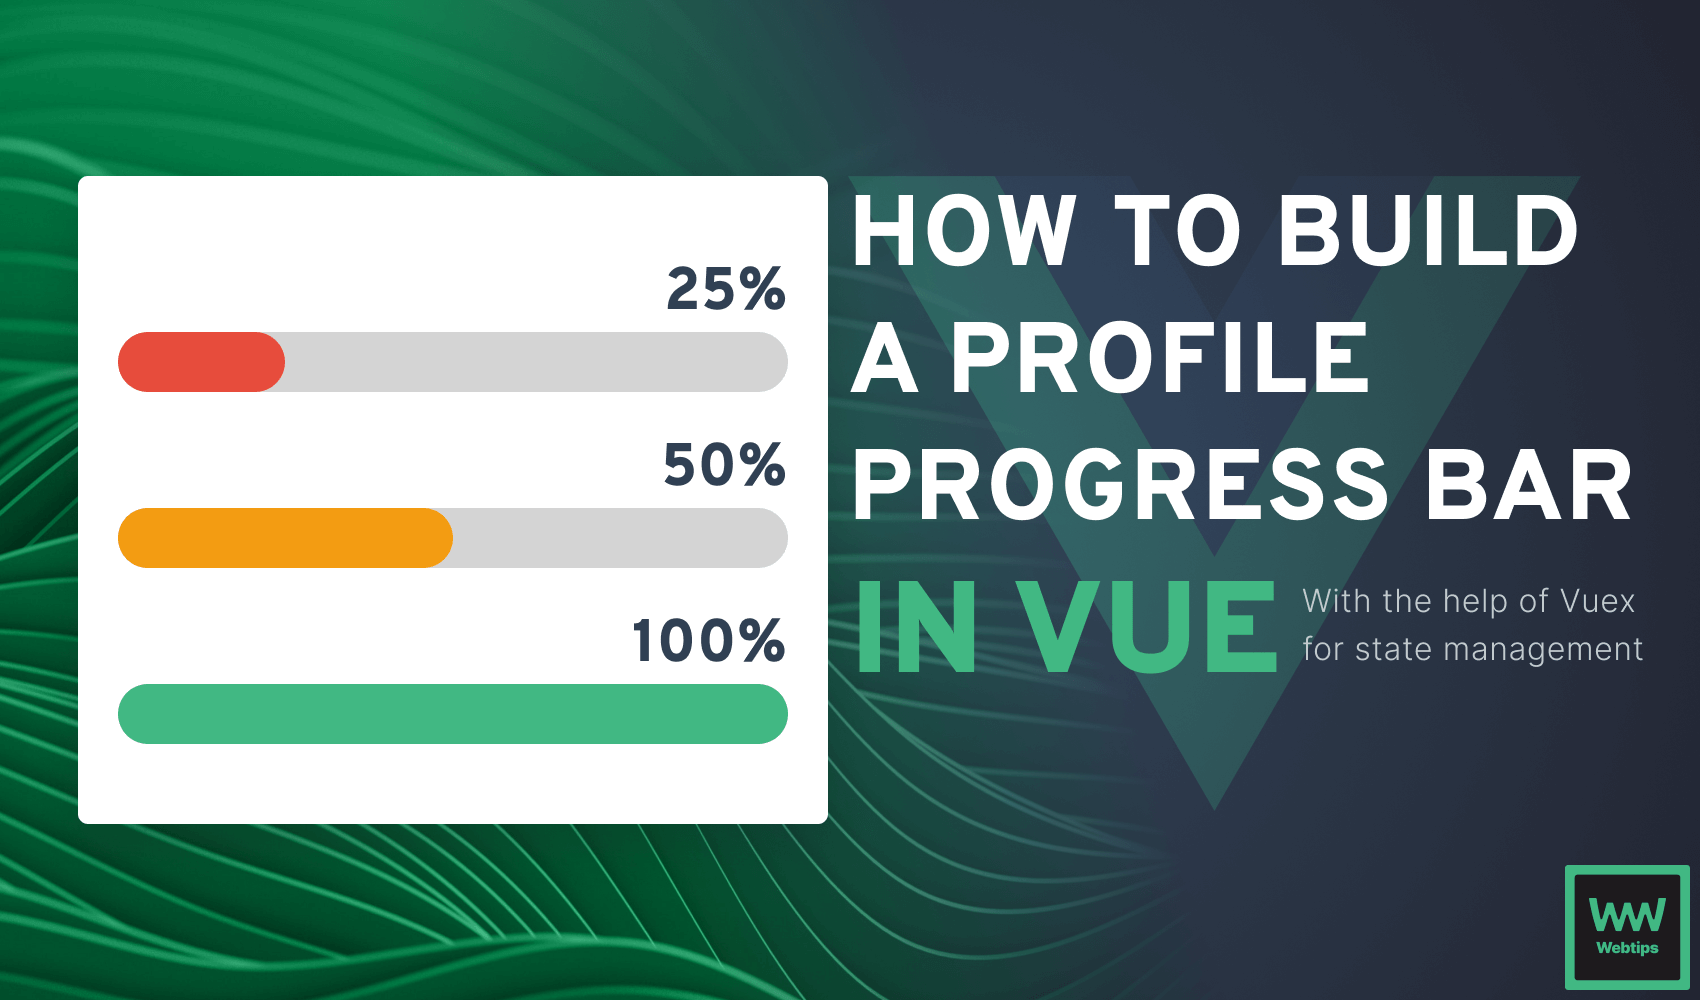 Building an Interactive Profile Progress Bar with Vue.js